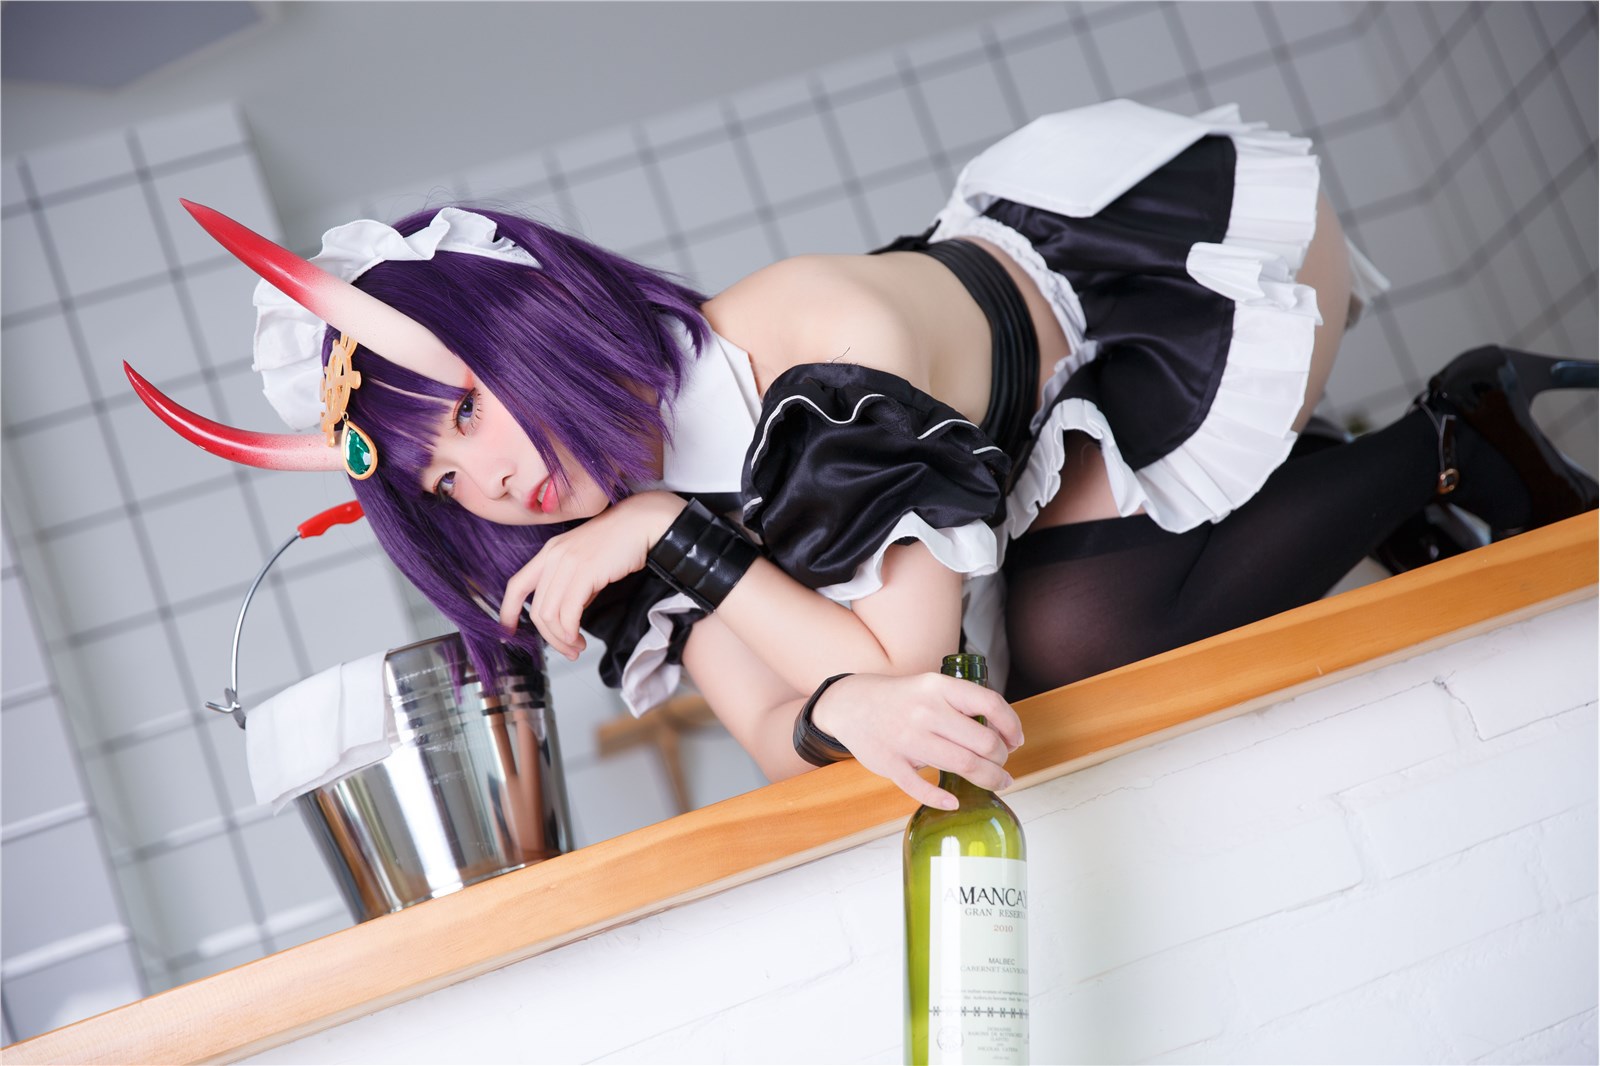 Anime blogger G44 won't get hurt. - Wine eats maid(12)